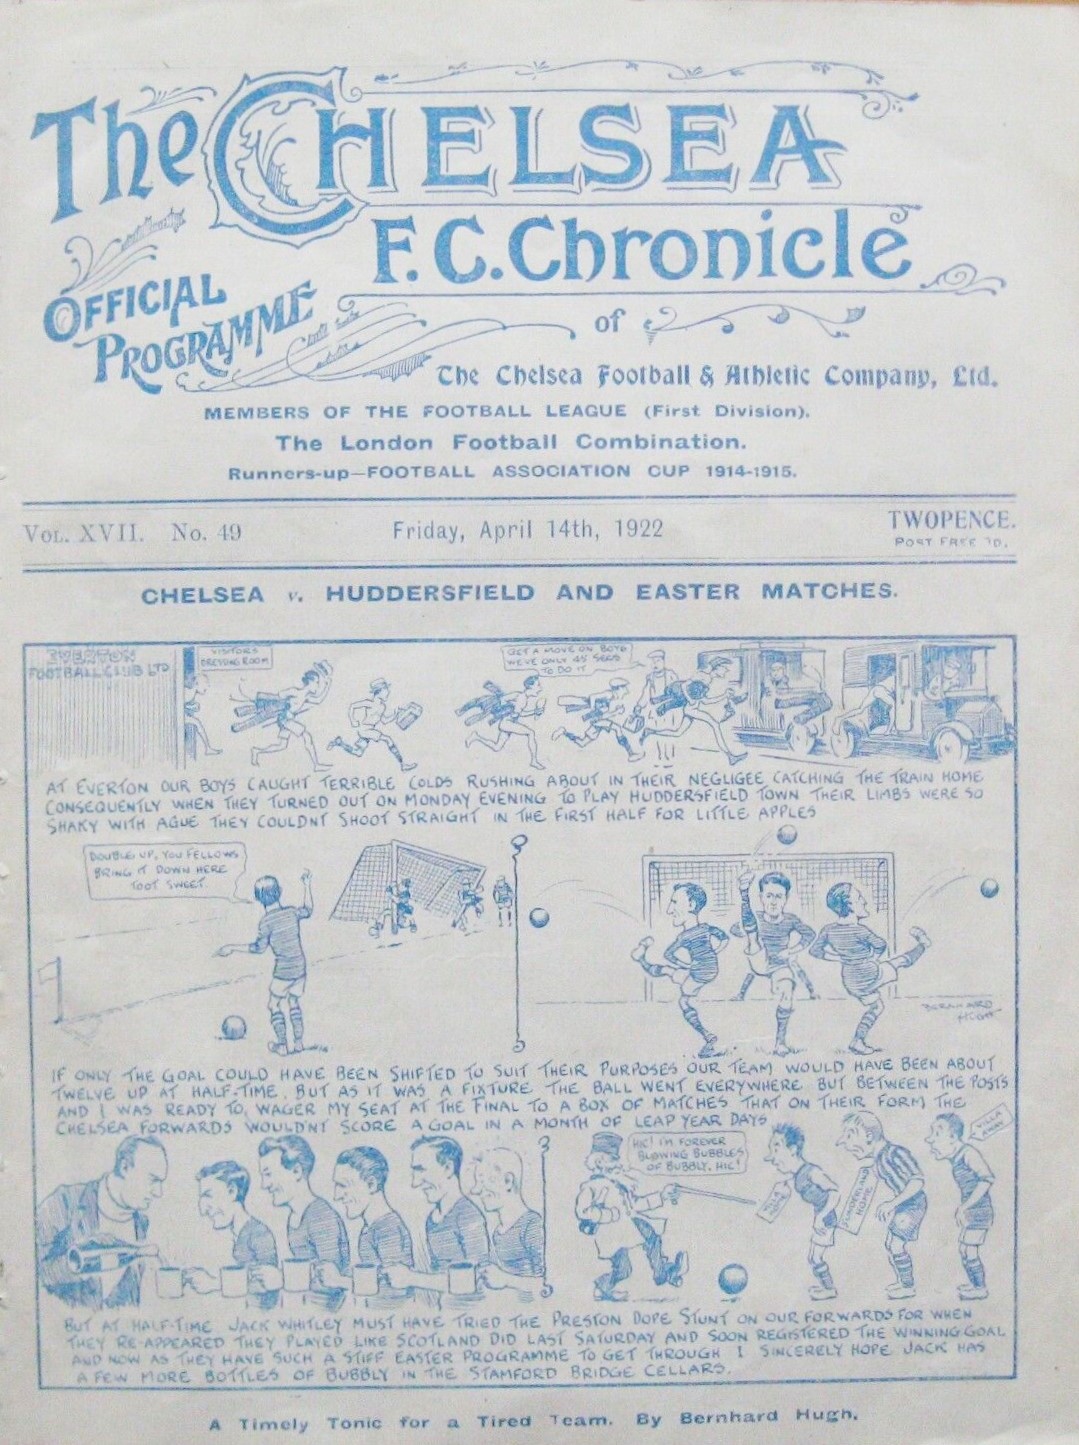 programme cover for Chelsea v Aston Villa, Friday, 14th Apr 1922